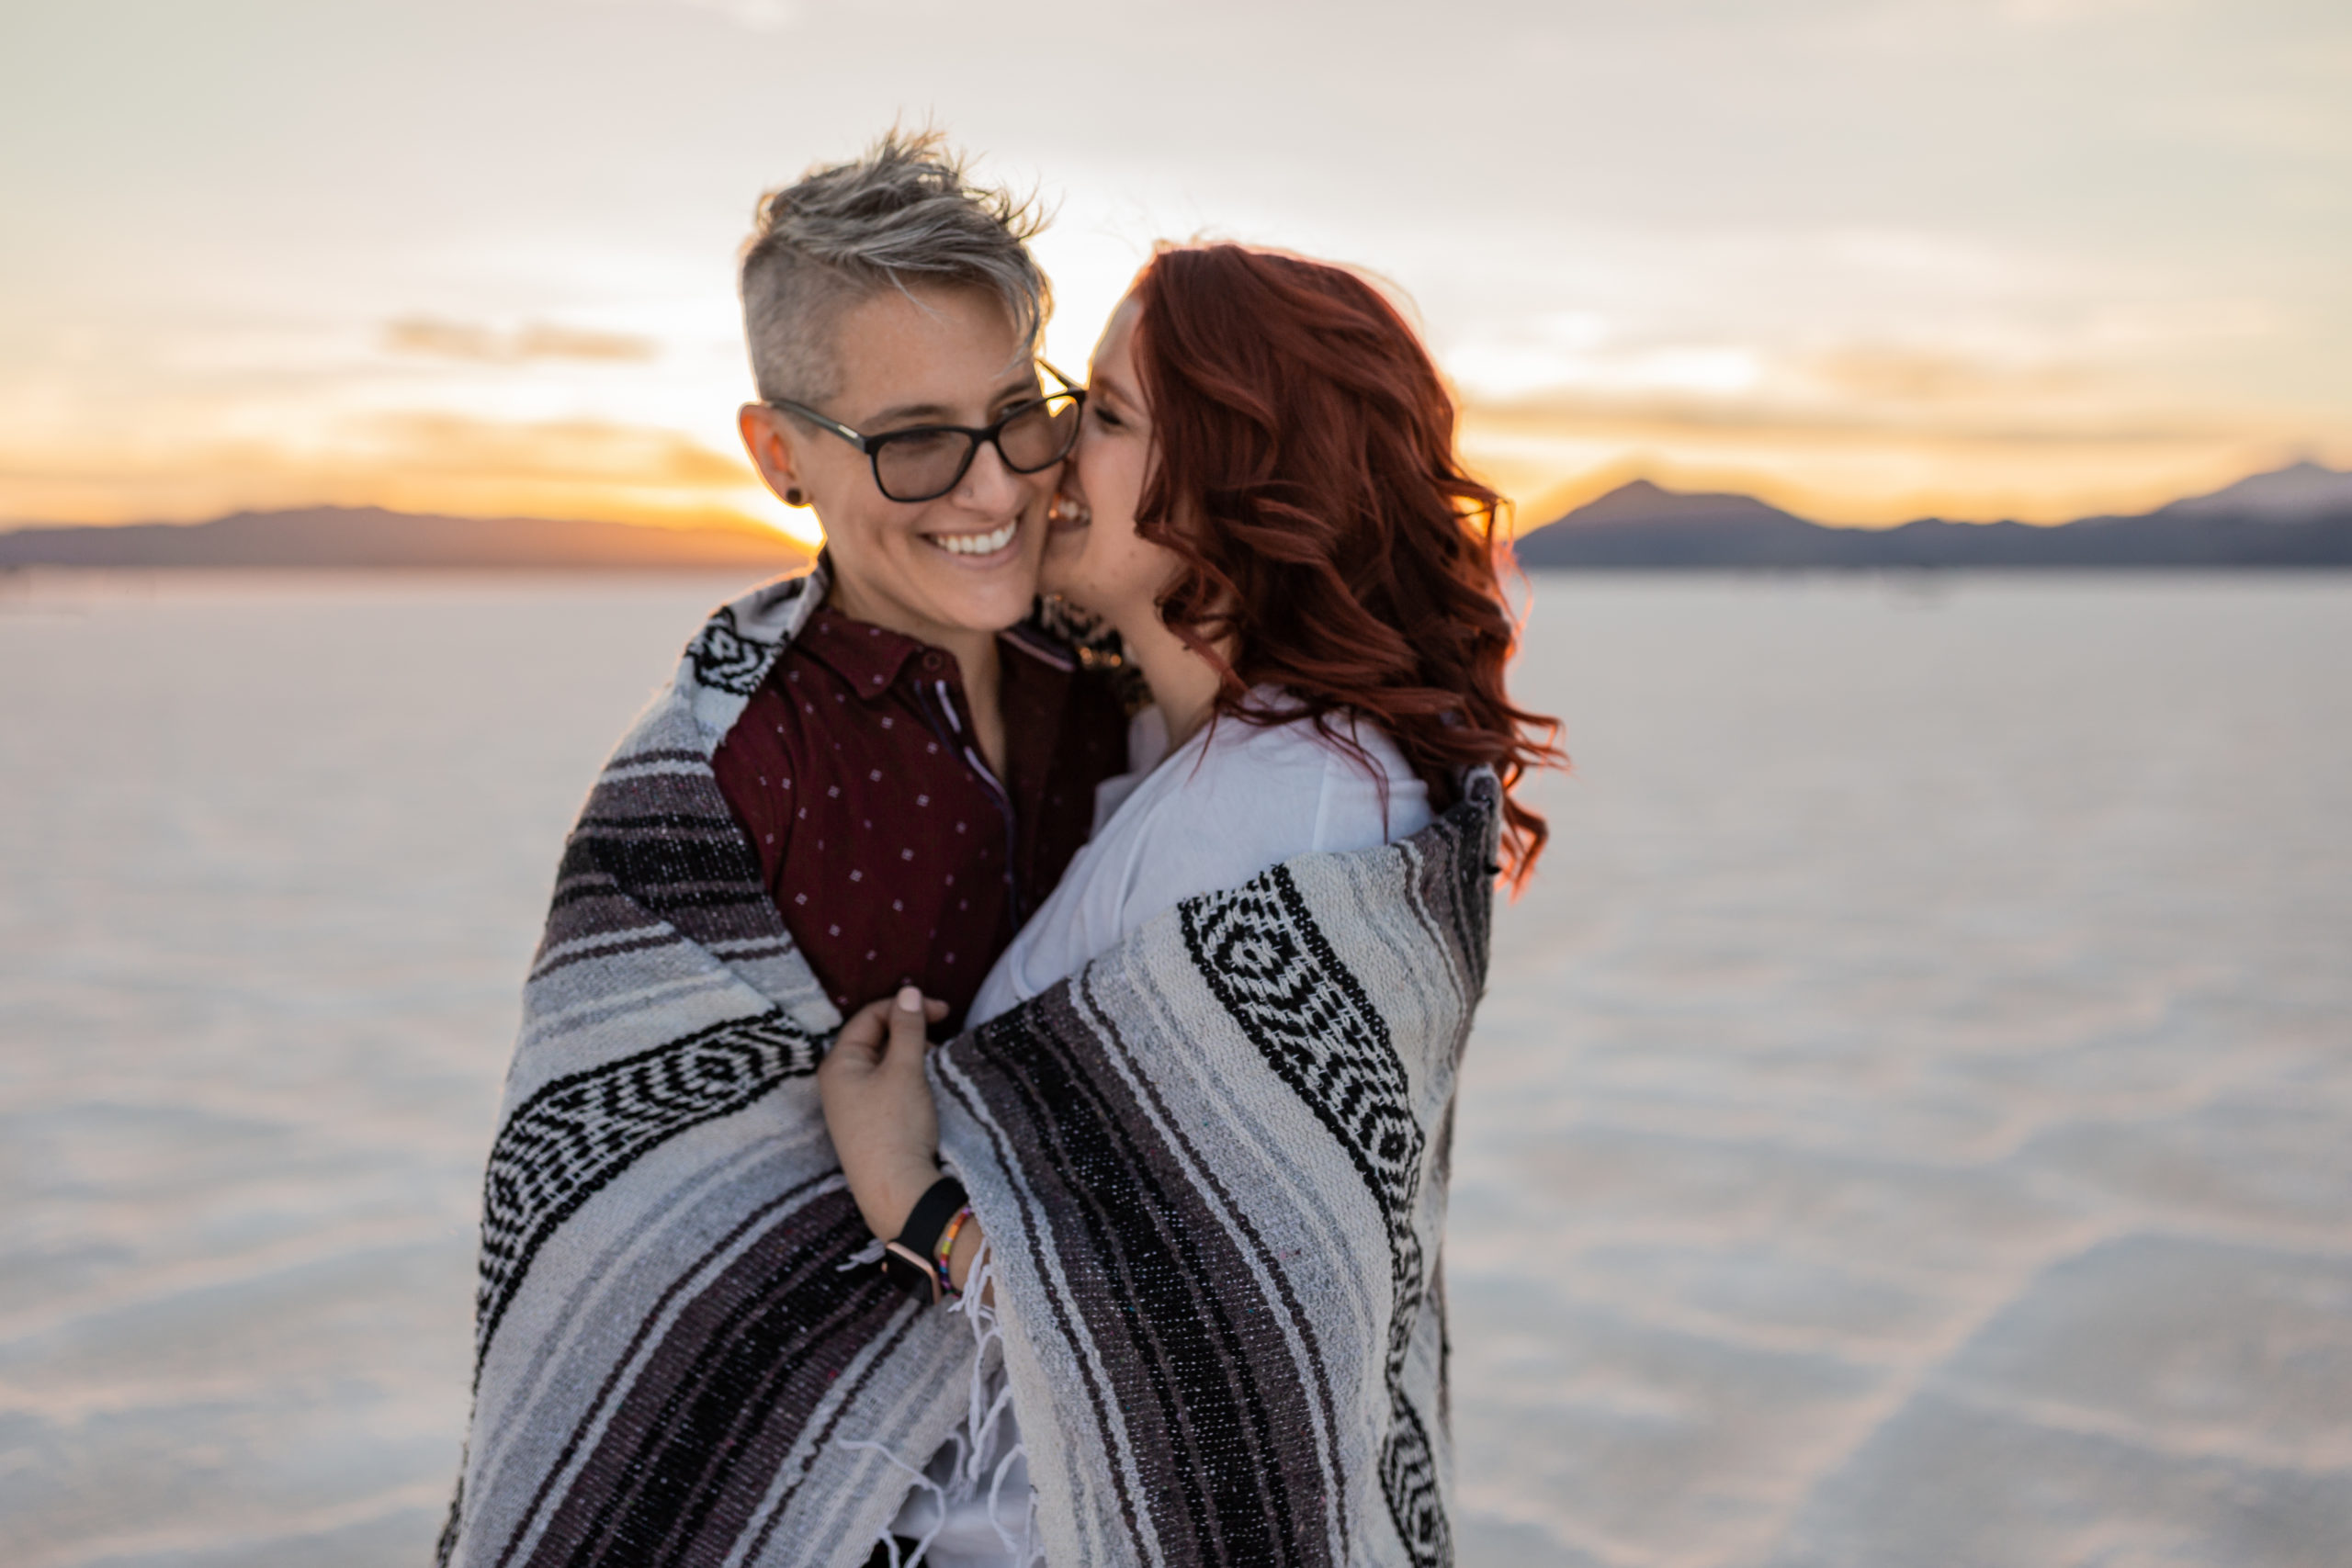 LGBTQ+ Bonneville Salt Flats Engagement Session at sunset in Utah